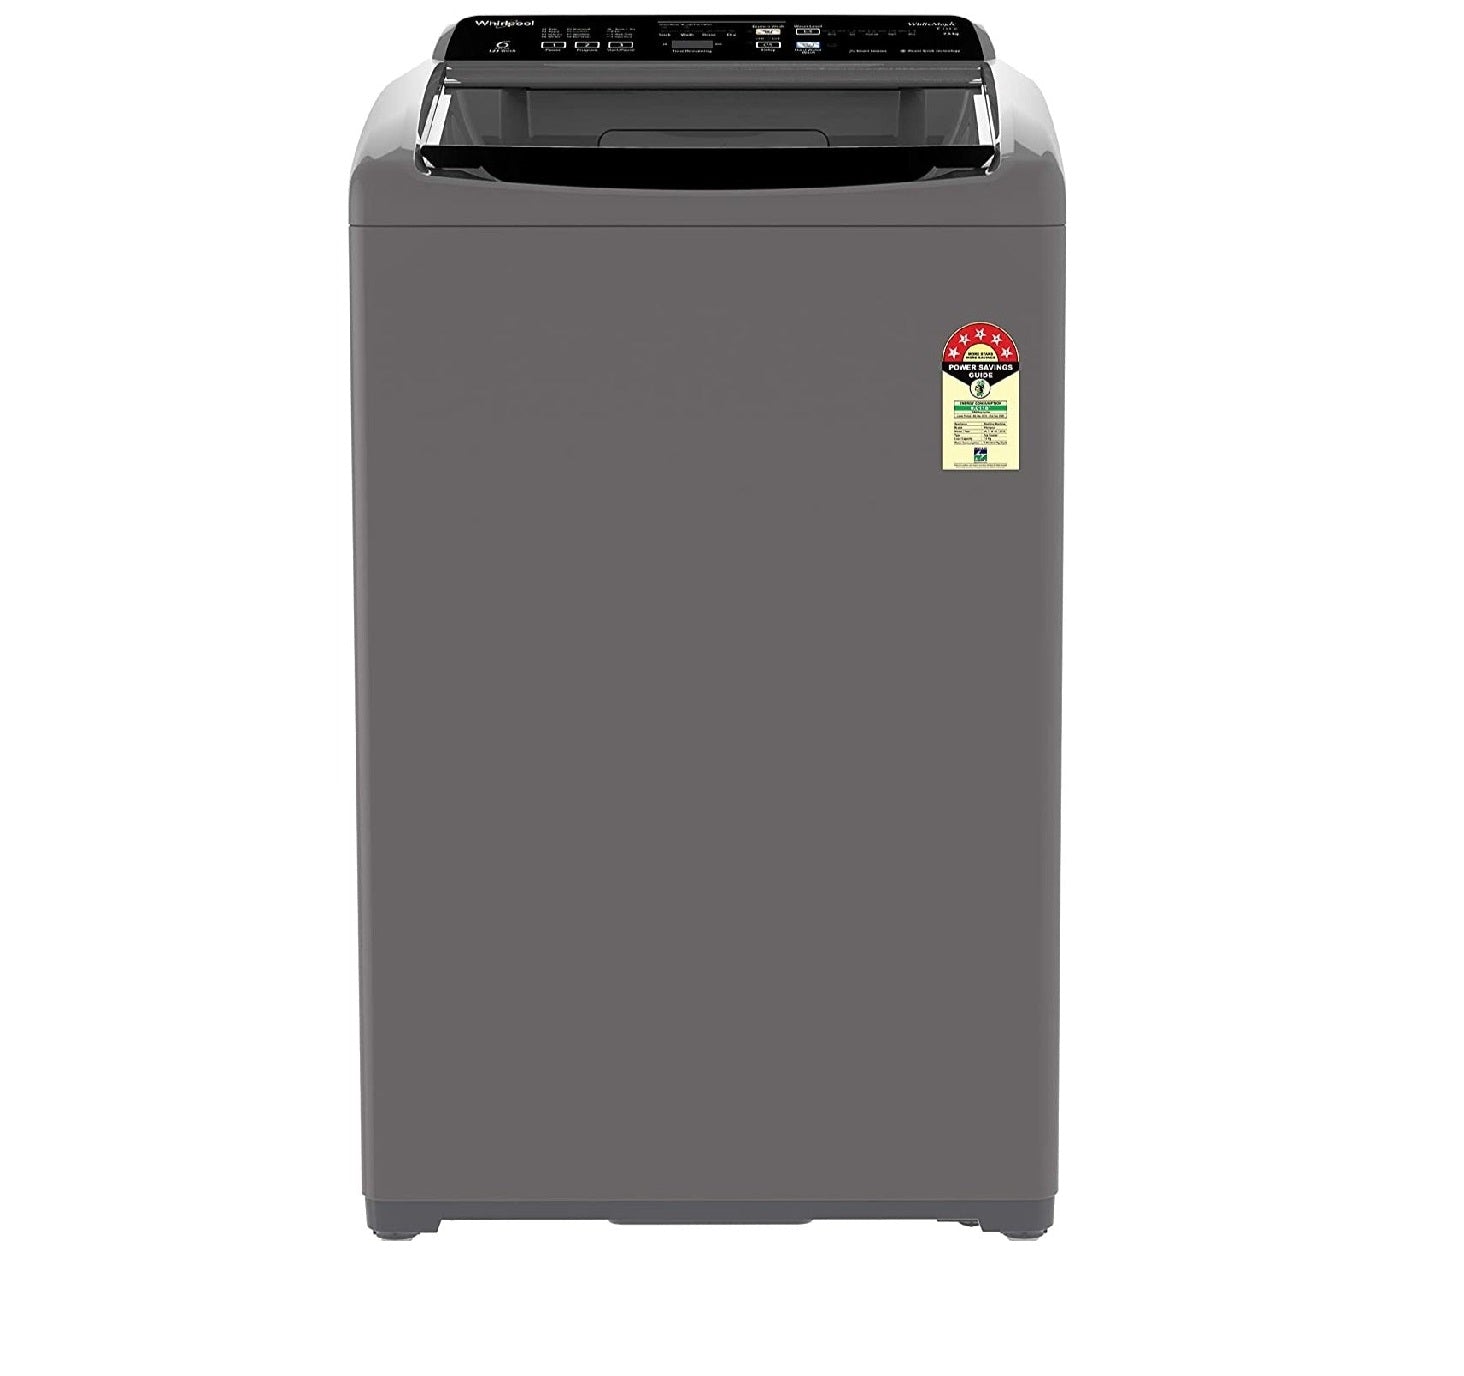 Whirlpool White magic Elite 7.5 Kg Top Loading Washing Machine Grey (31370)